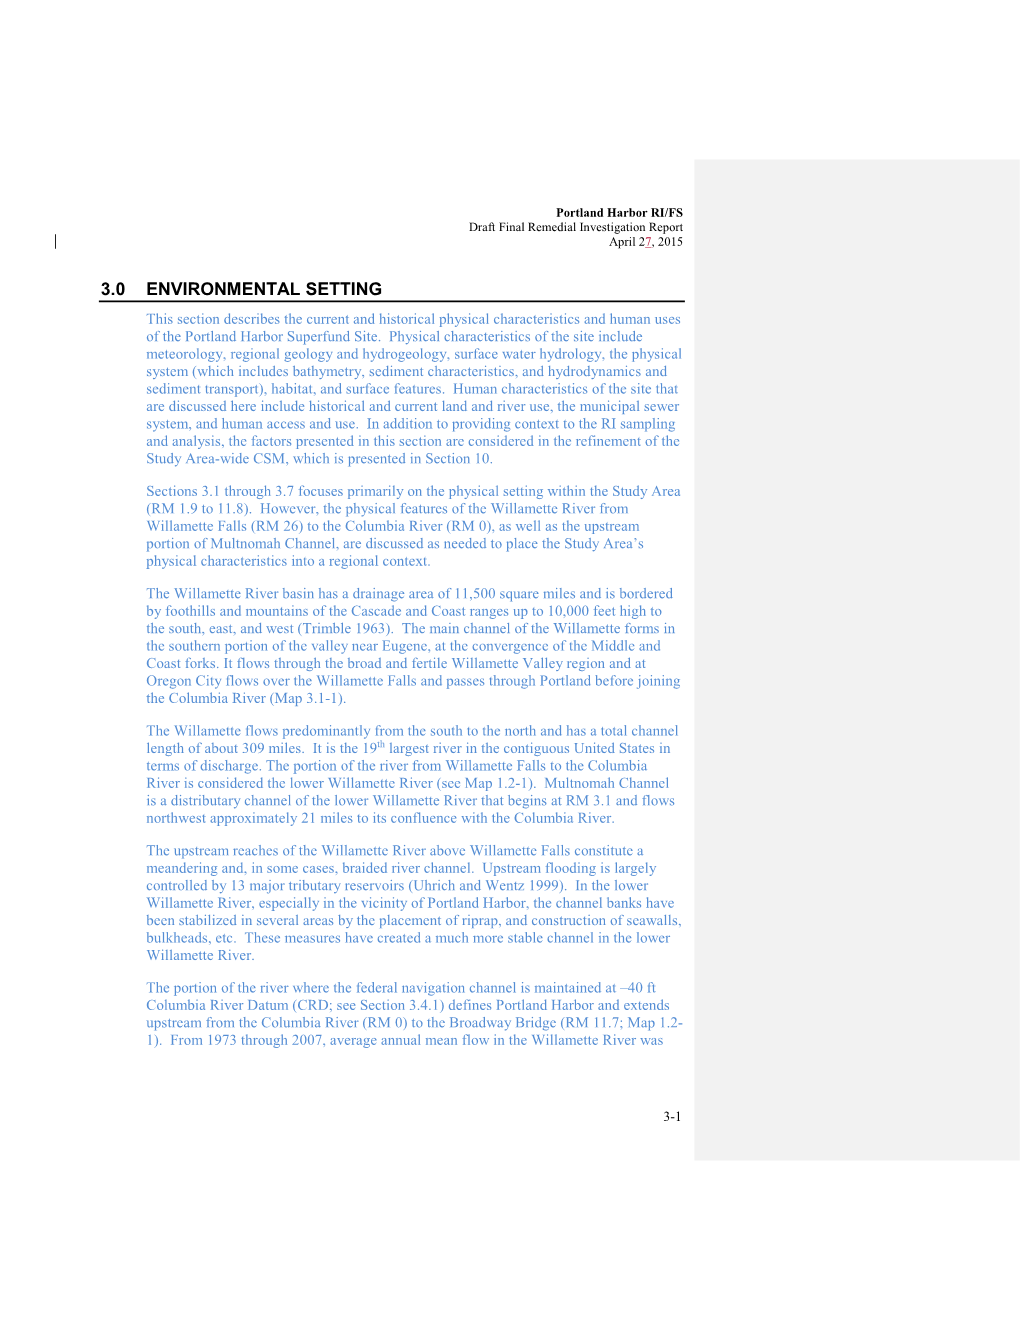 Portland Harbor RI/FS Draft Final Remedial Investigation Report April 27, 2015